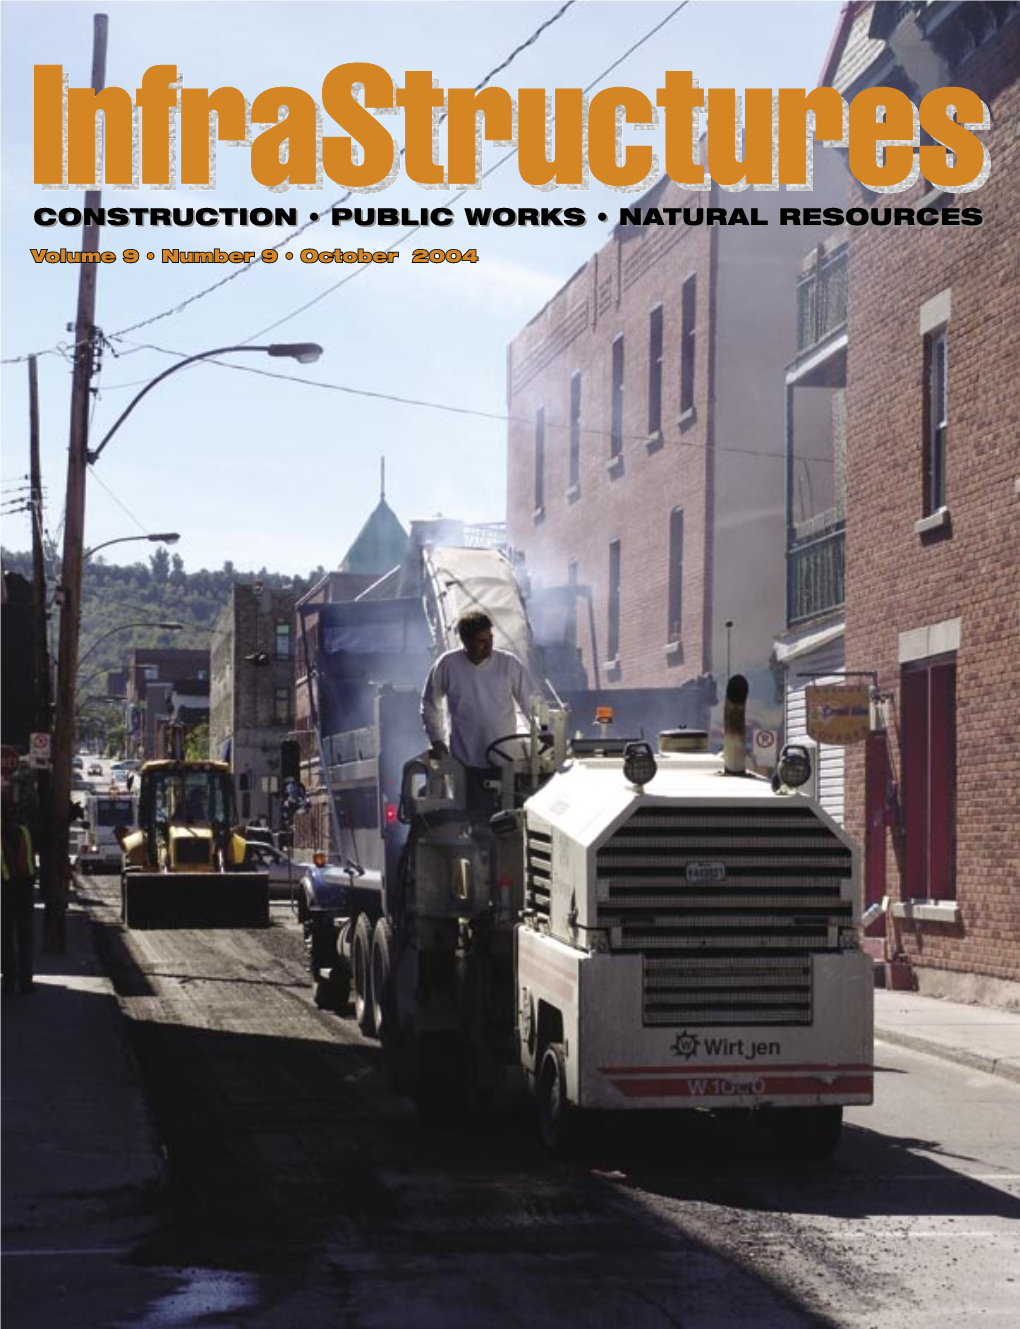 Construction • Public Works • Natural Resources